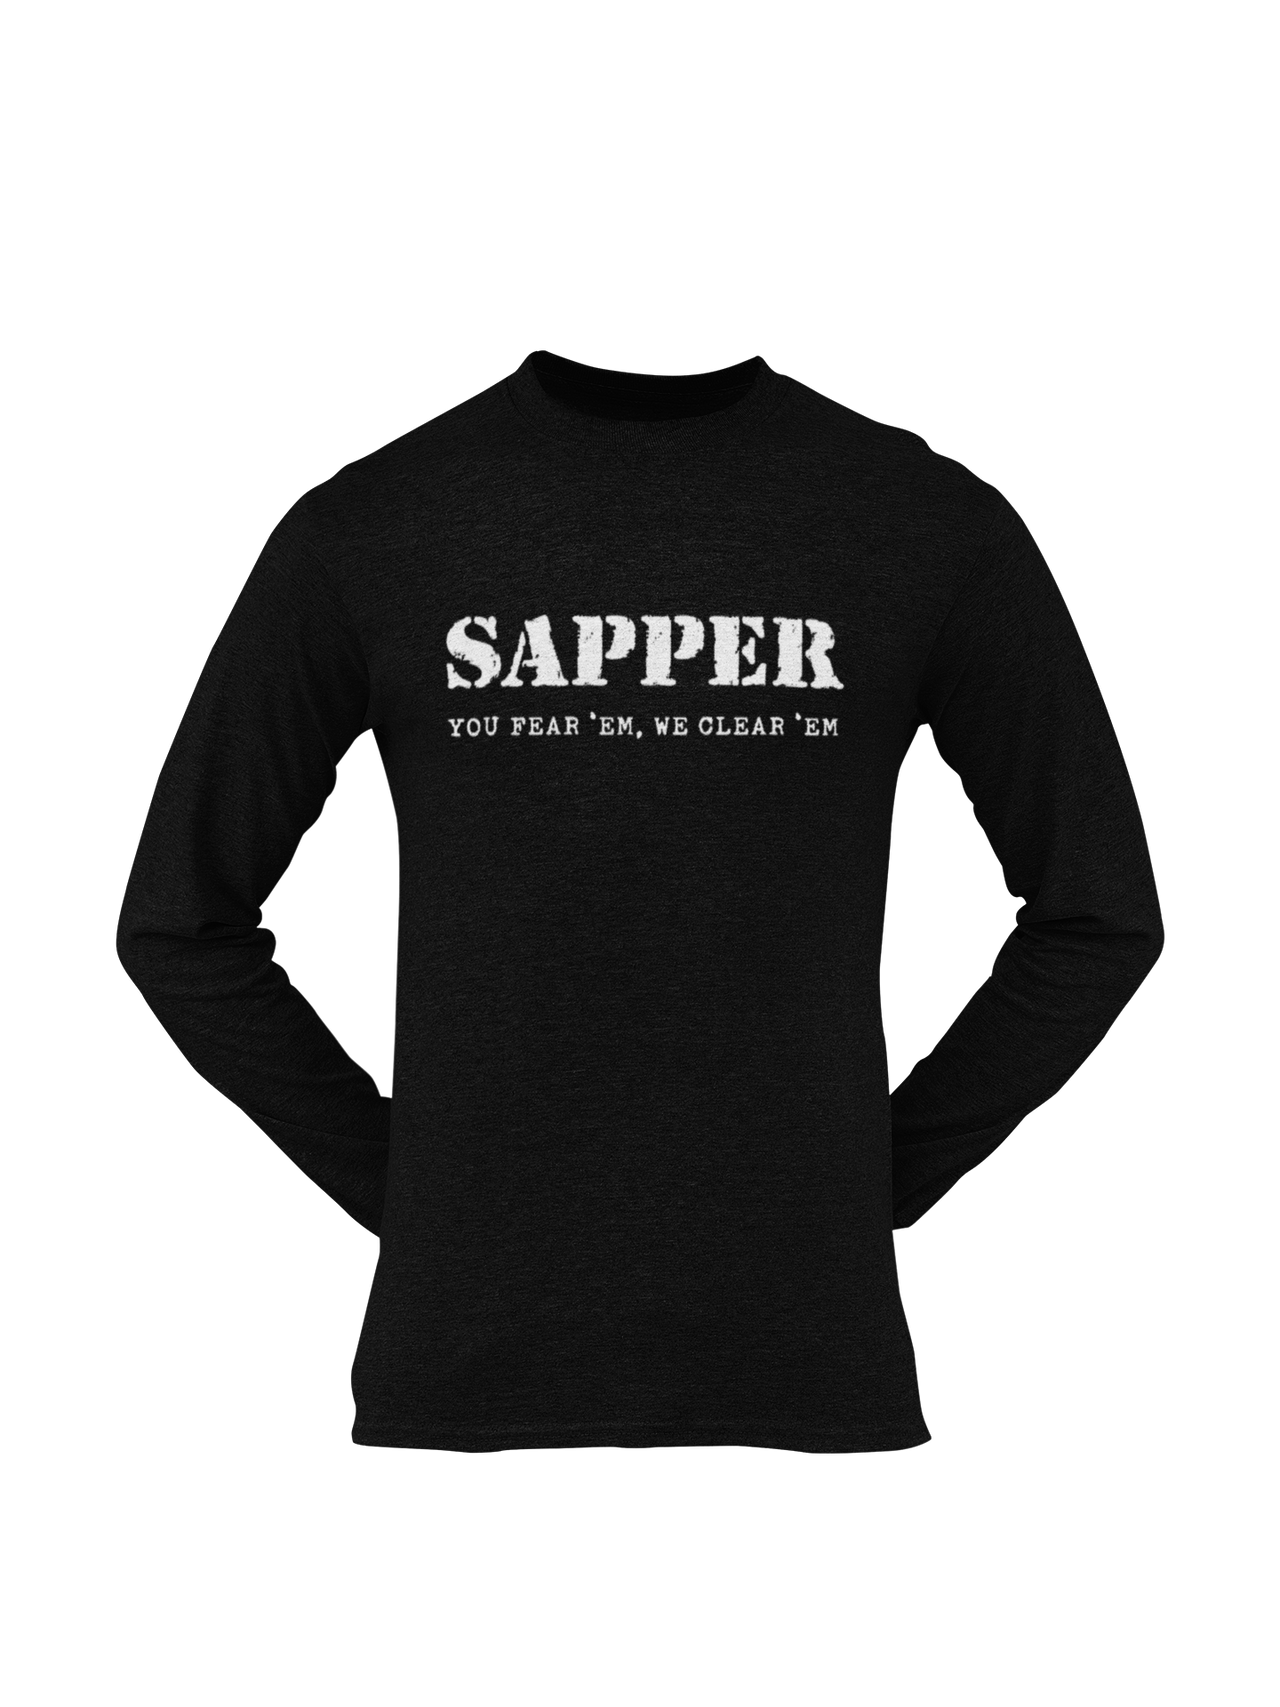 Sapper T-shirt - You Fear 'Em, We Clear 'Em (Men)